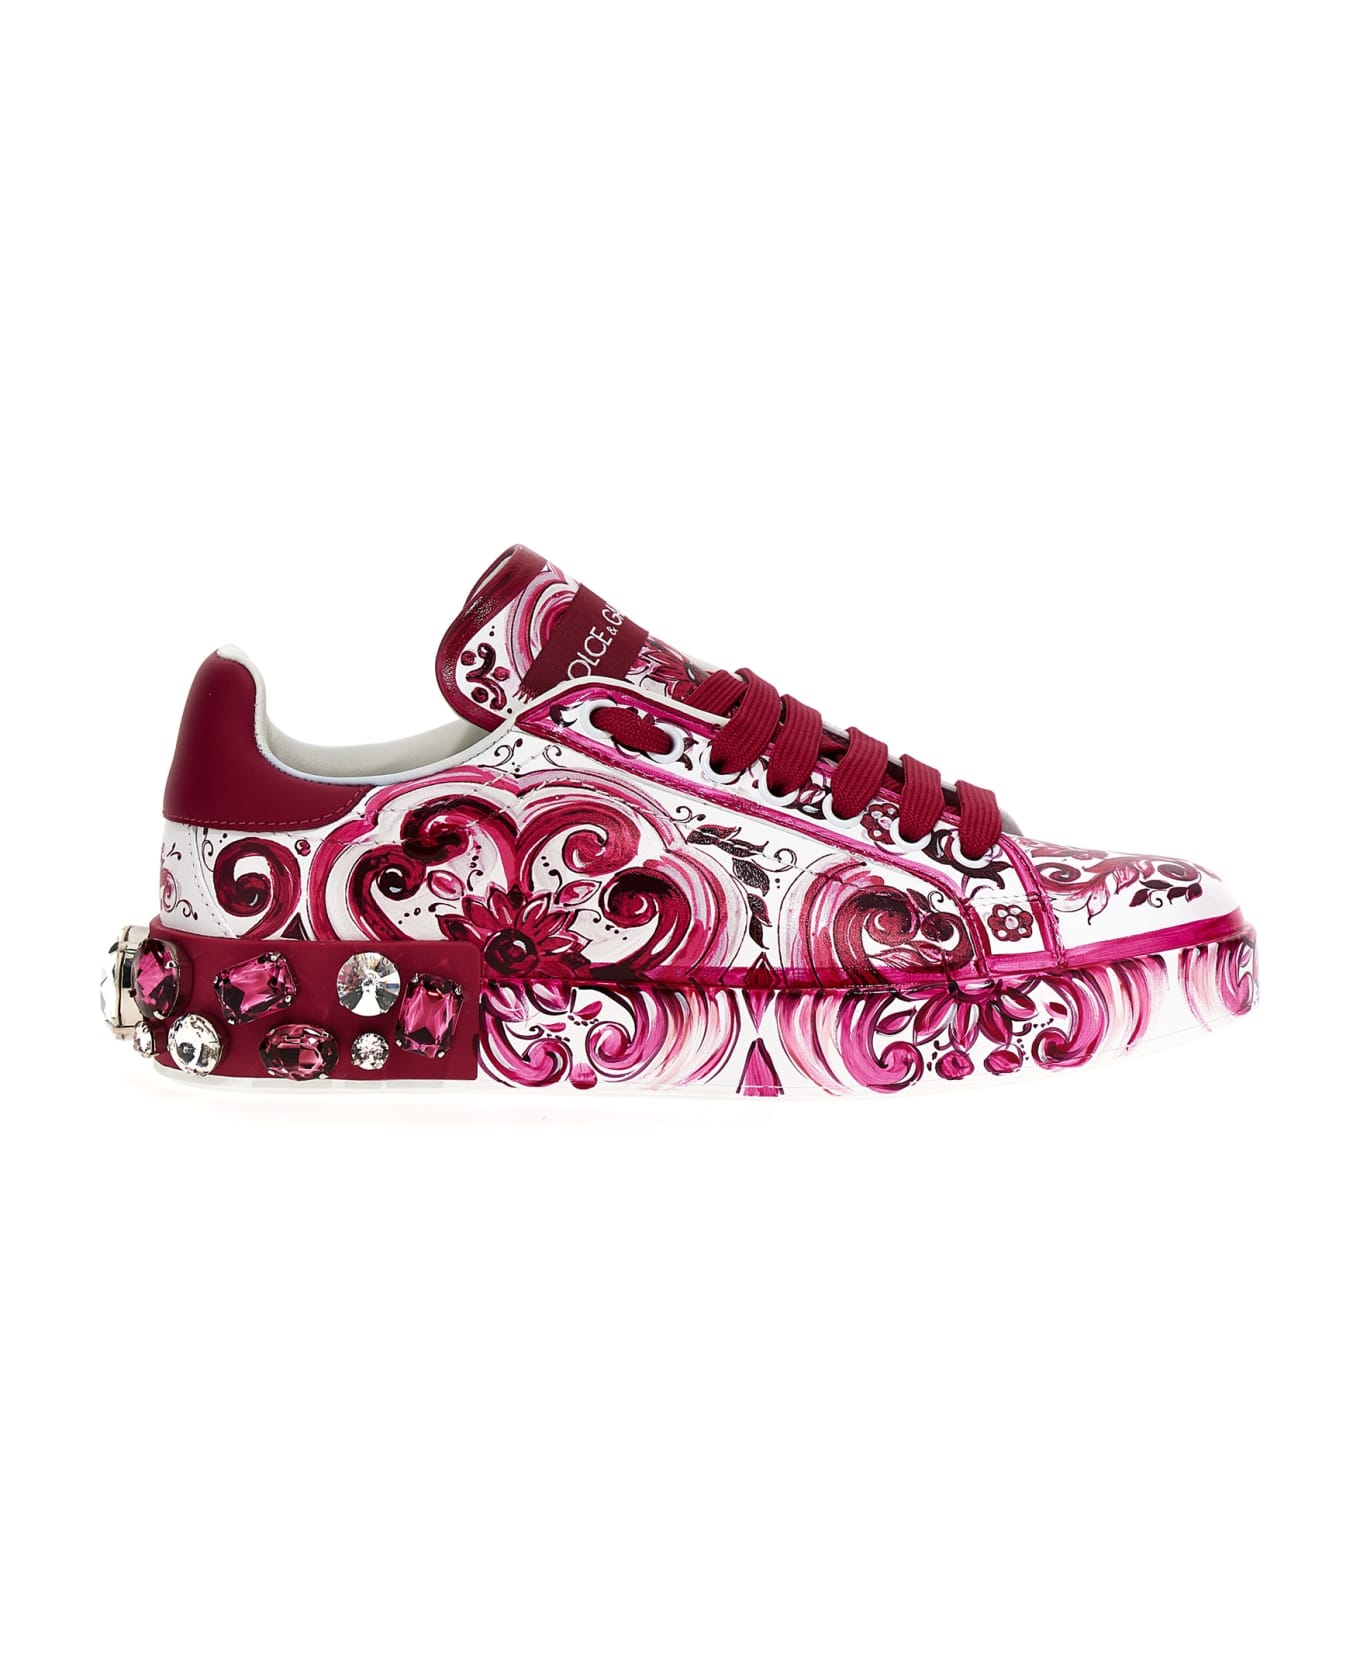 Dolce & Gabbana Portofino Leather Sneakers - Fuchsia スニーカー